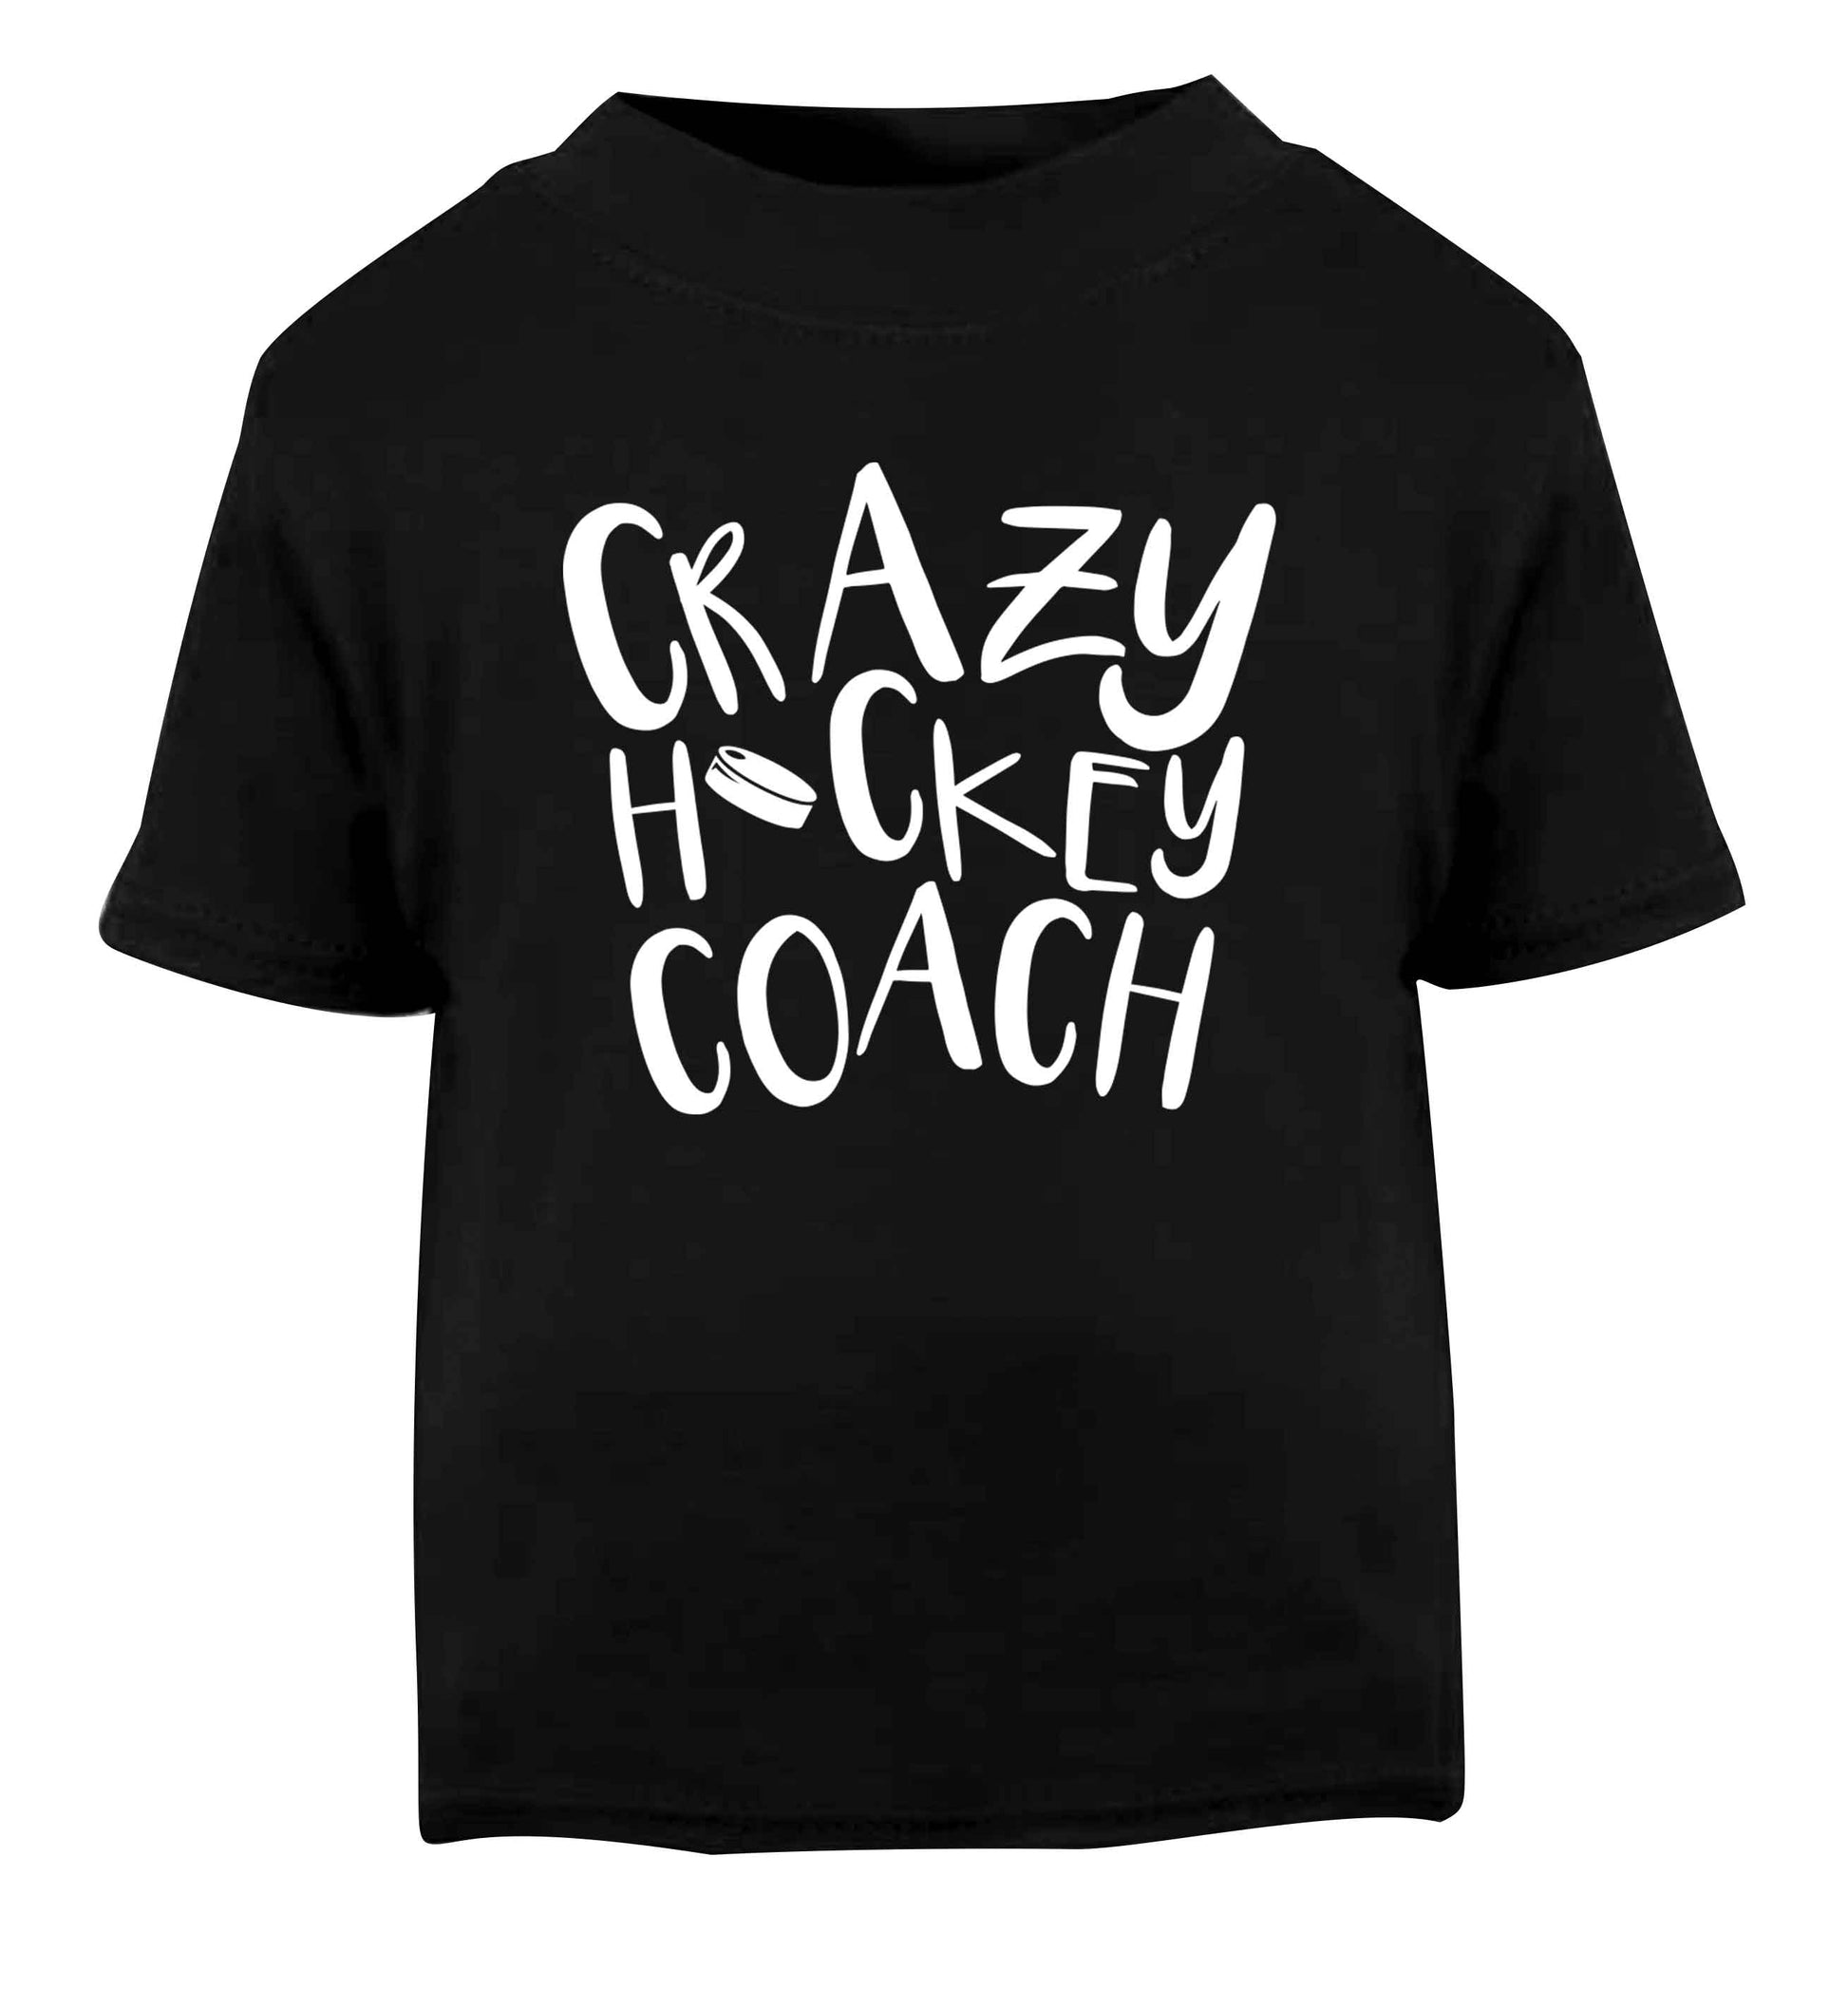 Crazy hockey coach Black Baby Toddler Tshirt 2 years